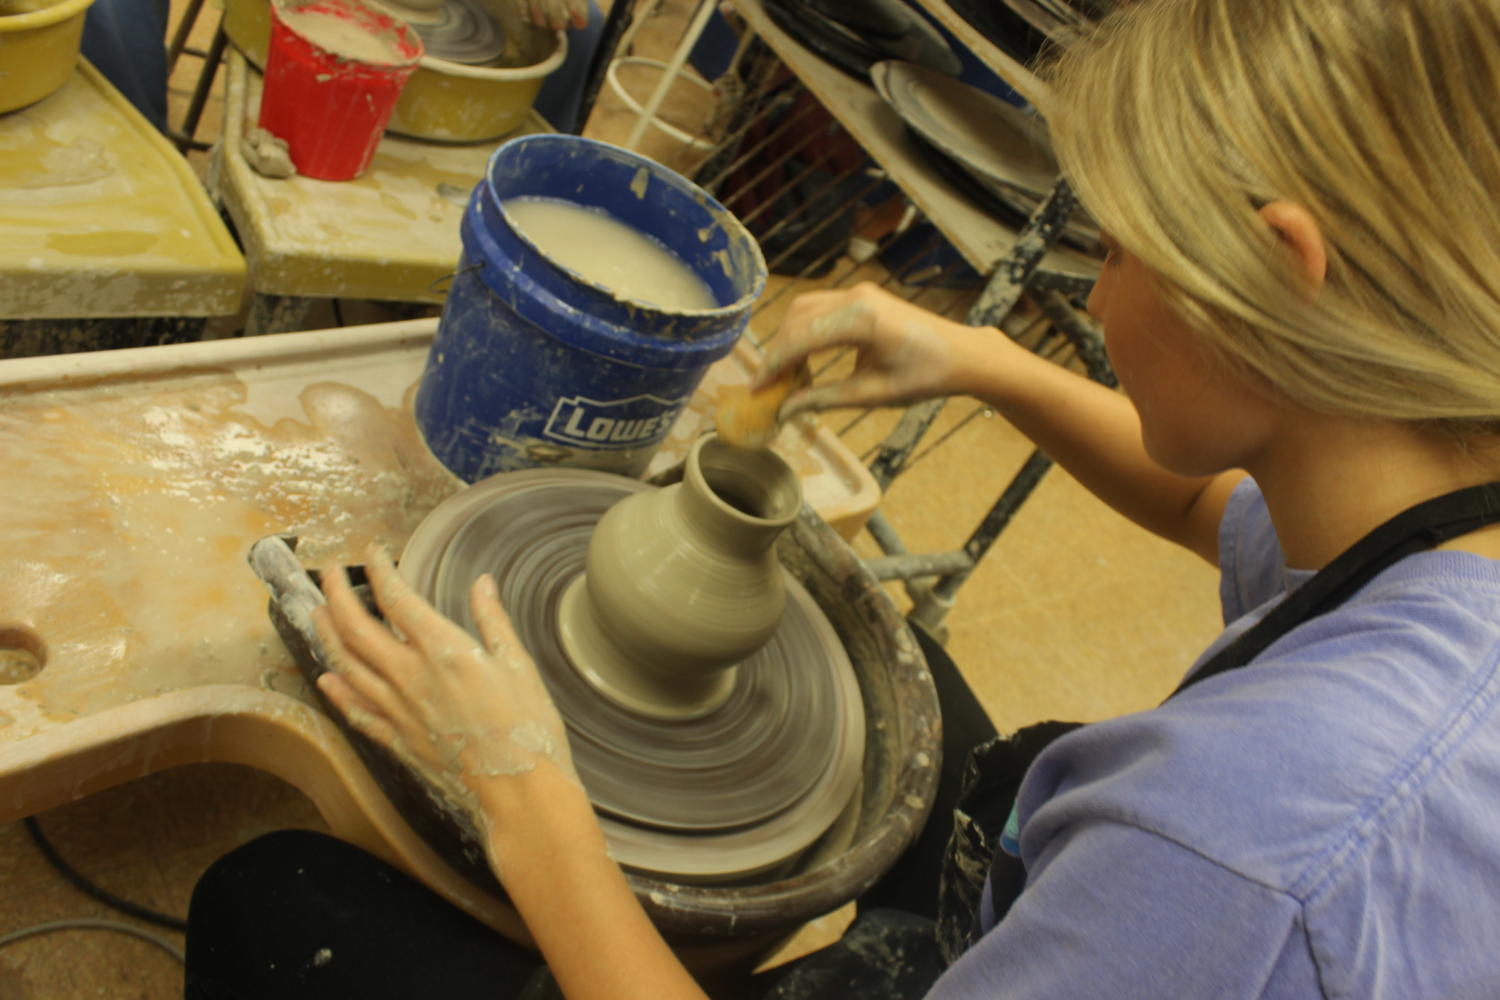 Senior Olivia Gorham utilizes the pottery wheel to form her clay vase.